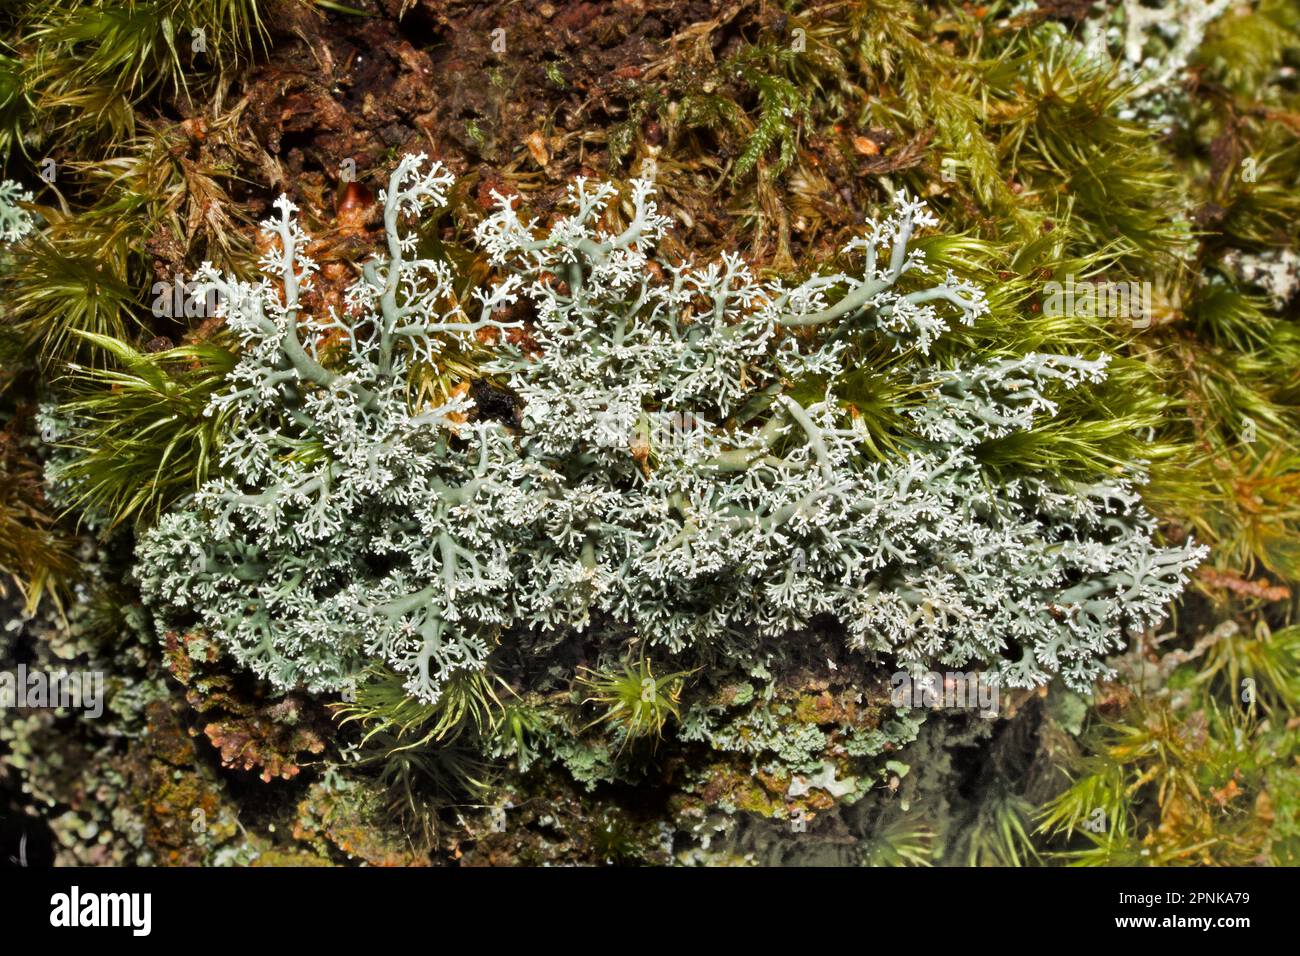 Sphaerophorus globosus is a fructicose lichen occurring on mossy, acidic upland rocks and trees. It has a cosmopolitan distribution. Stock Photo